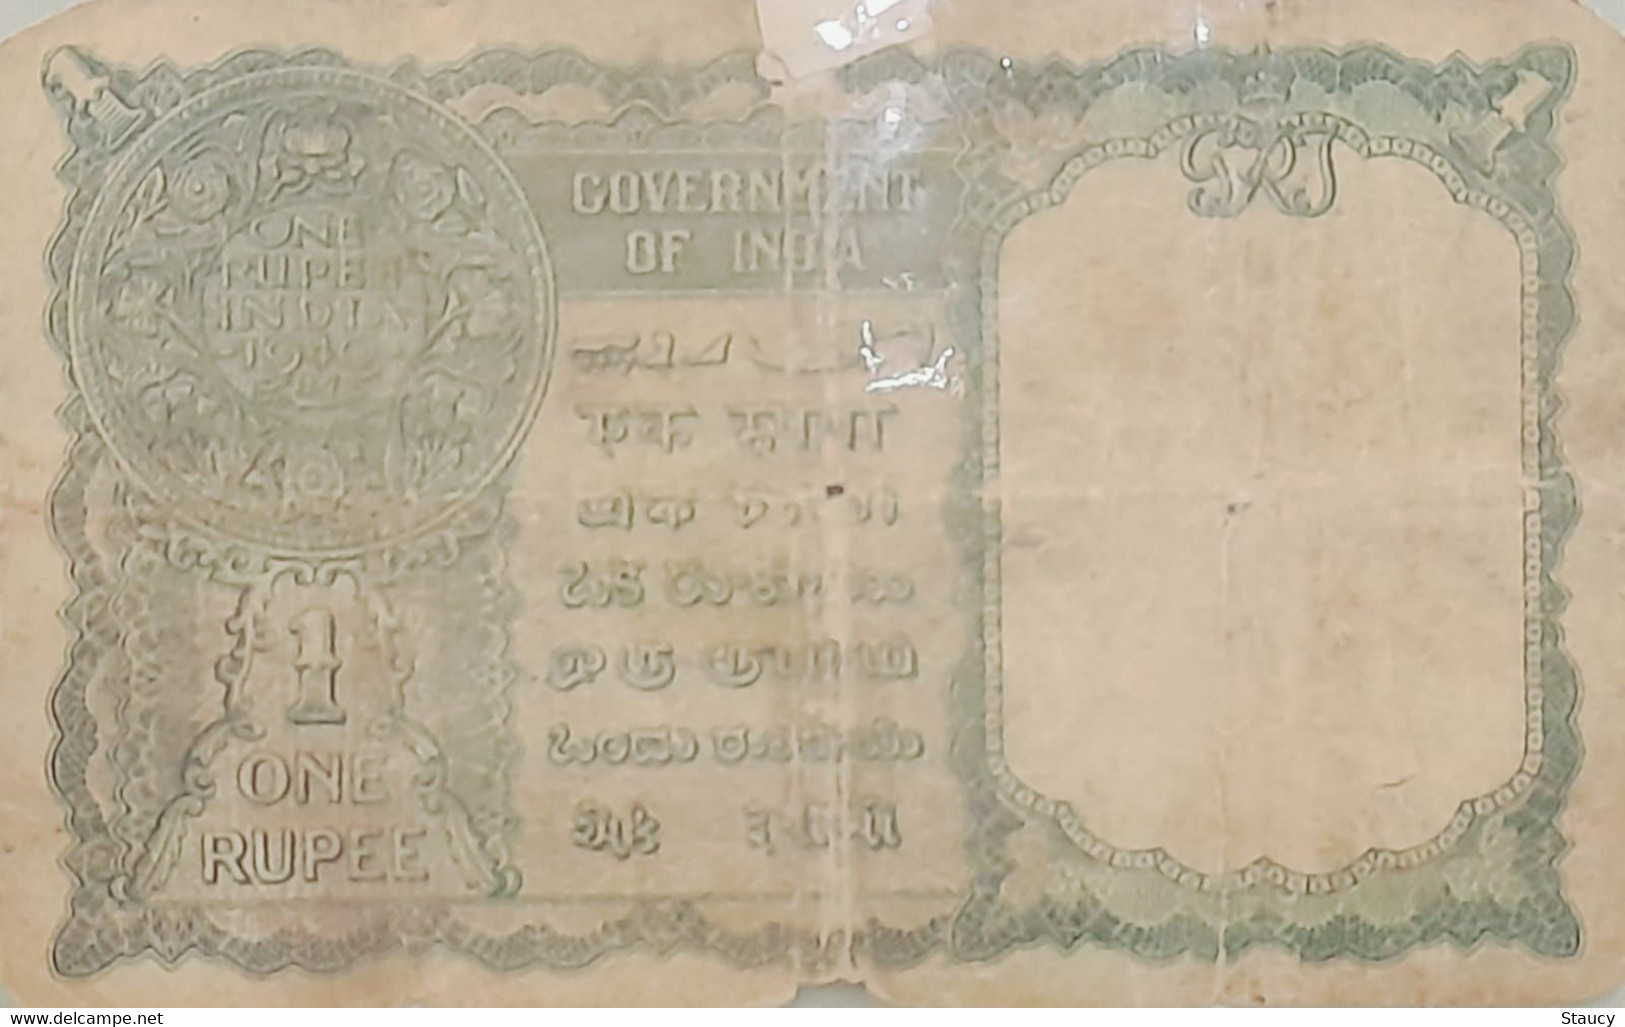 British India / PAKISTAN 1940 King George KGVI Rs.1 One Rupee C E Jones "Ovpt. GOVERNMENT Of PAKISTAN" As Per Scan - Pakistan